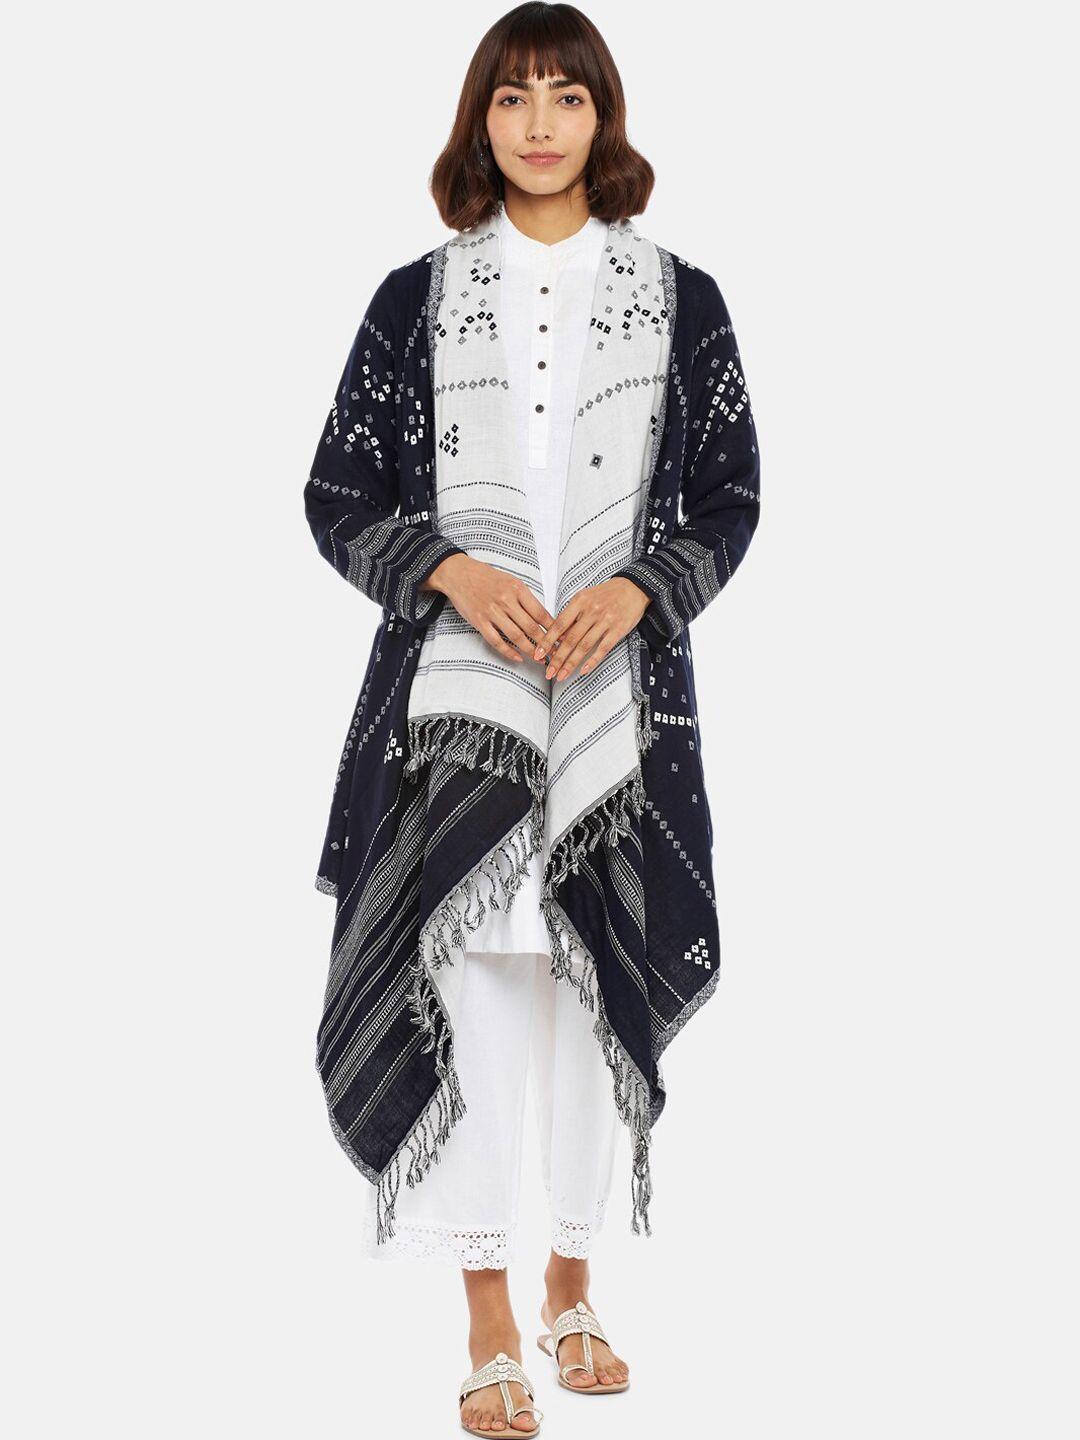 rangmanch by pantaloons women navy blue & white acrylic longline open front jacket